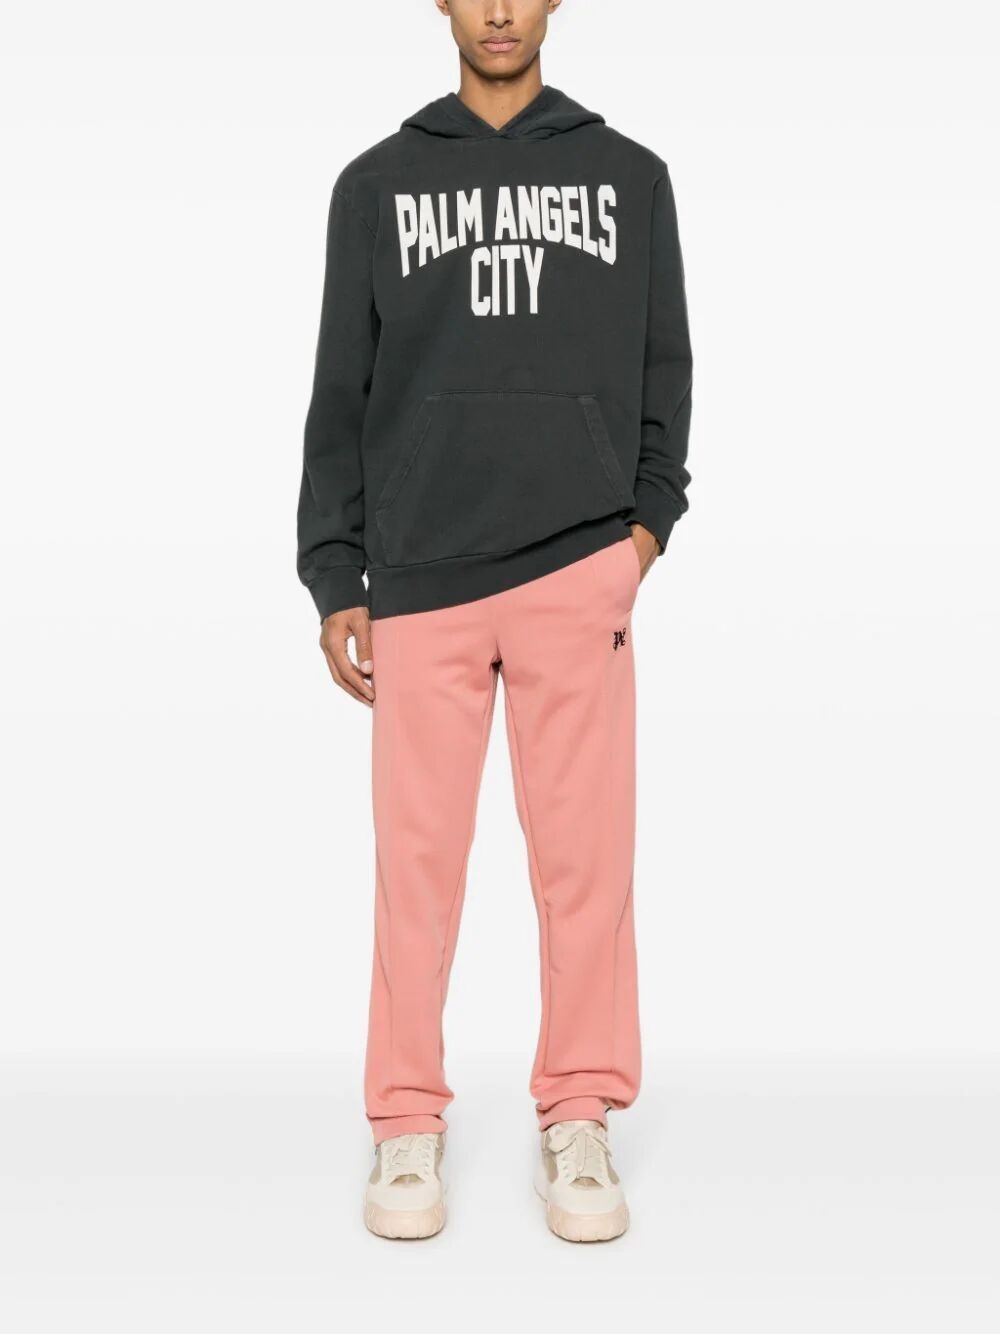 Palm angels city hoodie - 2